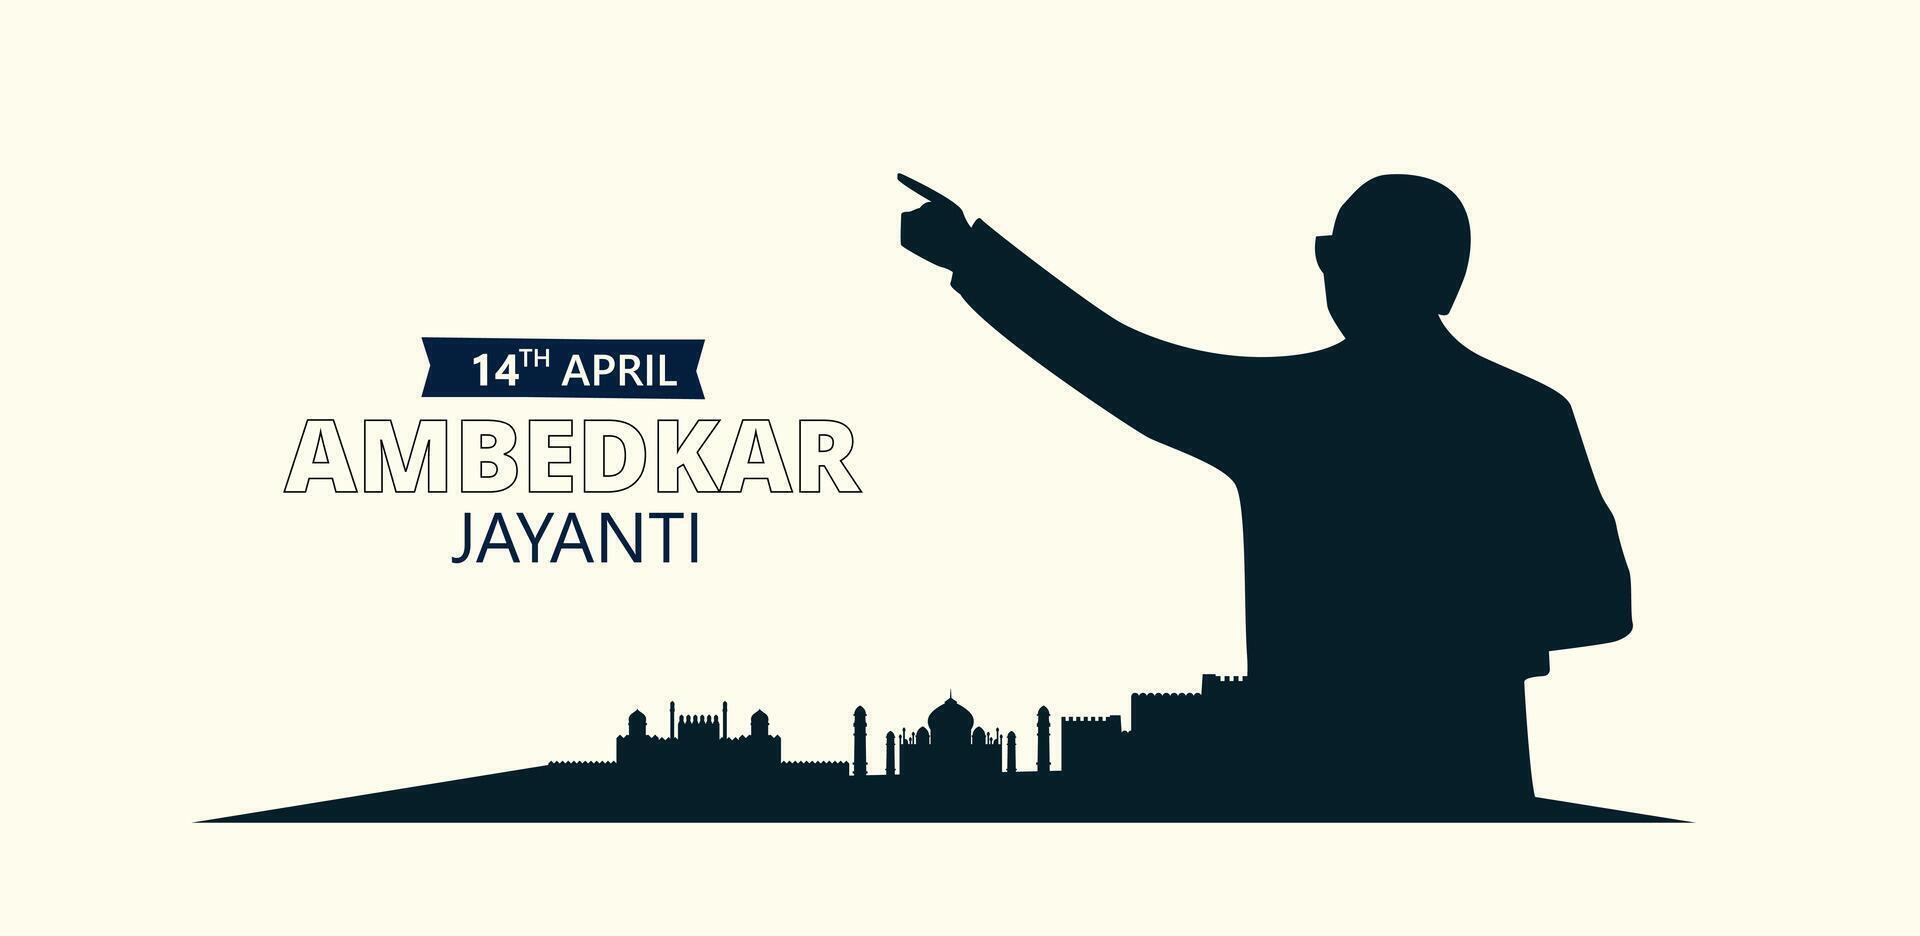 Dr bhimrao ramji ambedkar con constitución de India para ambedkar Jayanti en 14 abril vector